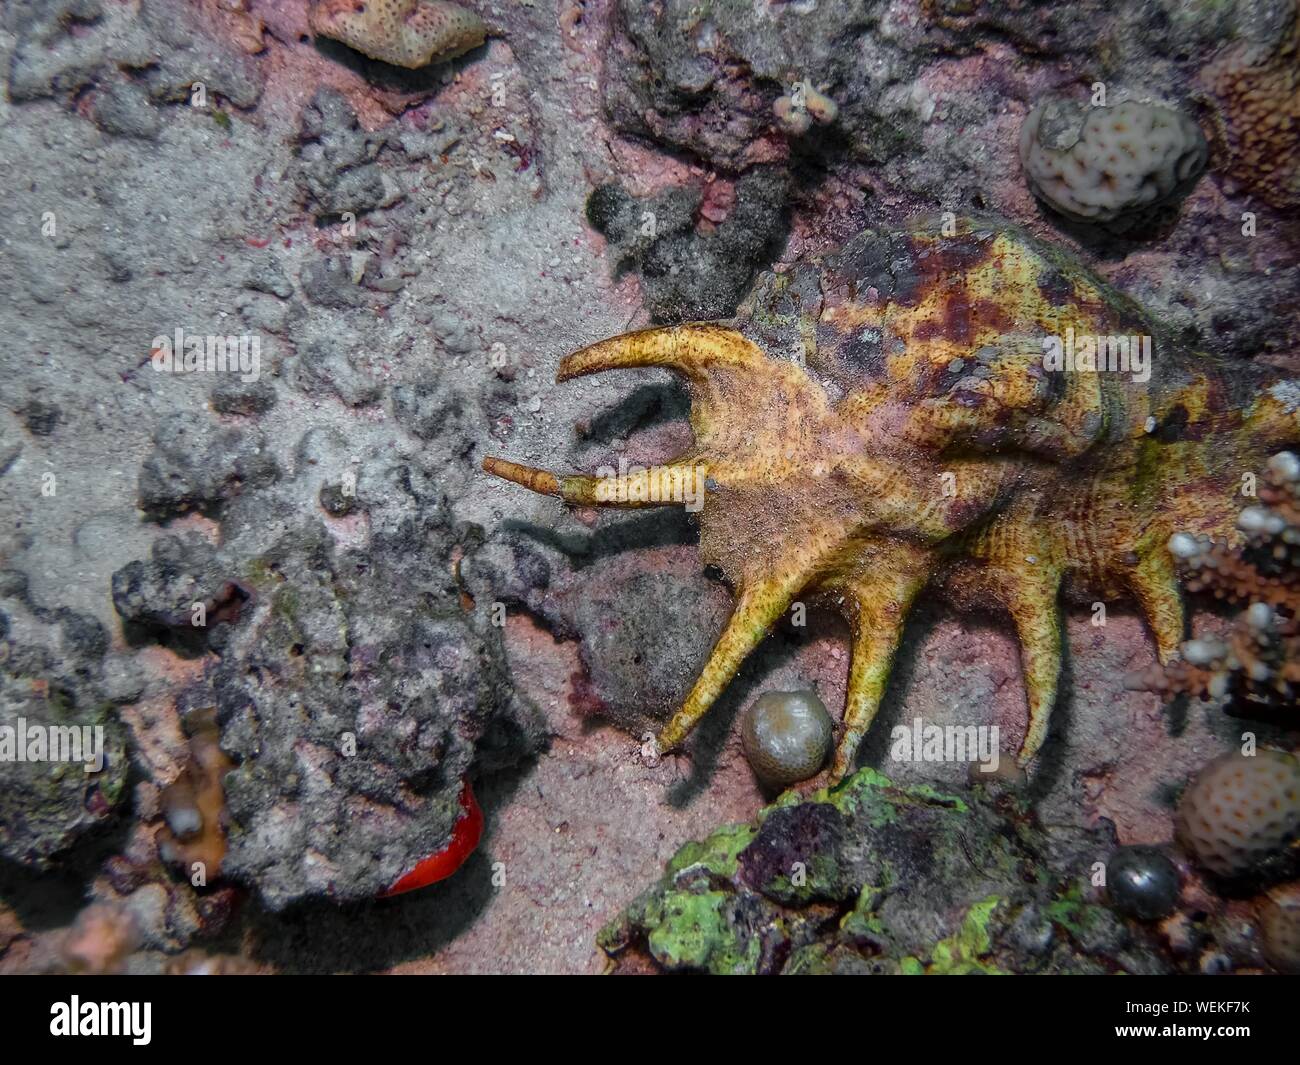 Common Spider Conch (Lambis lambis) Stock Photo